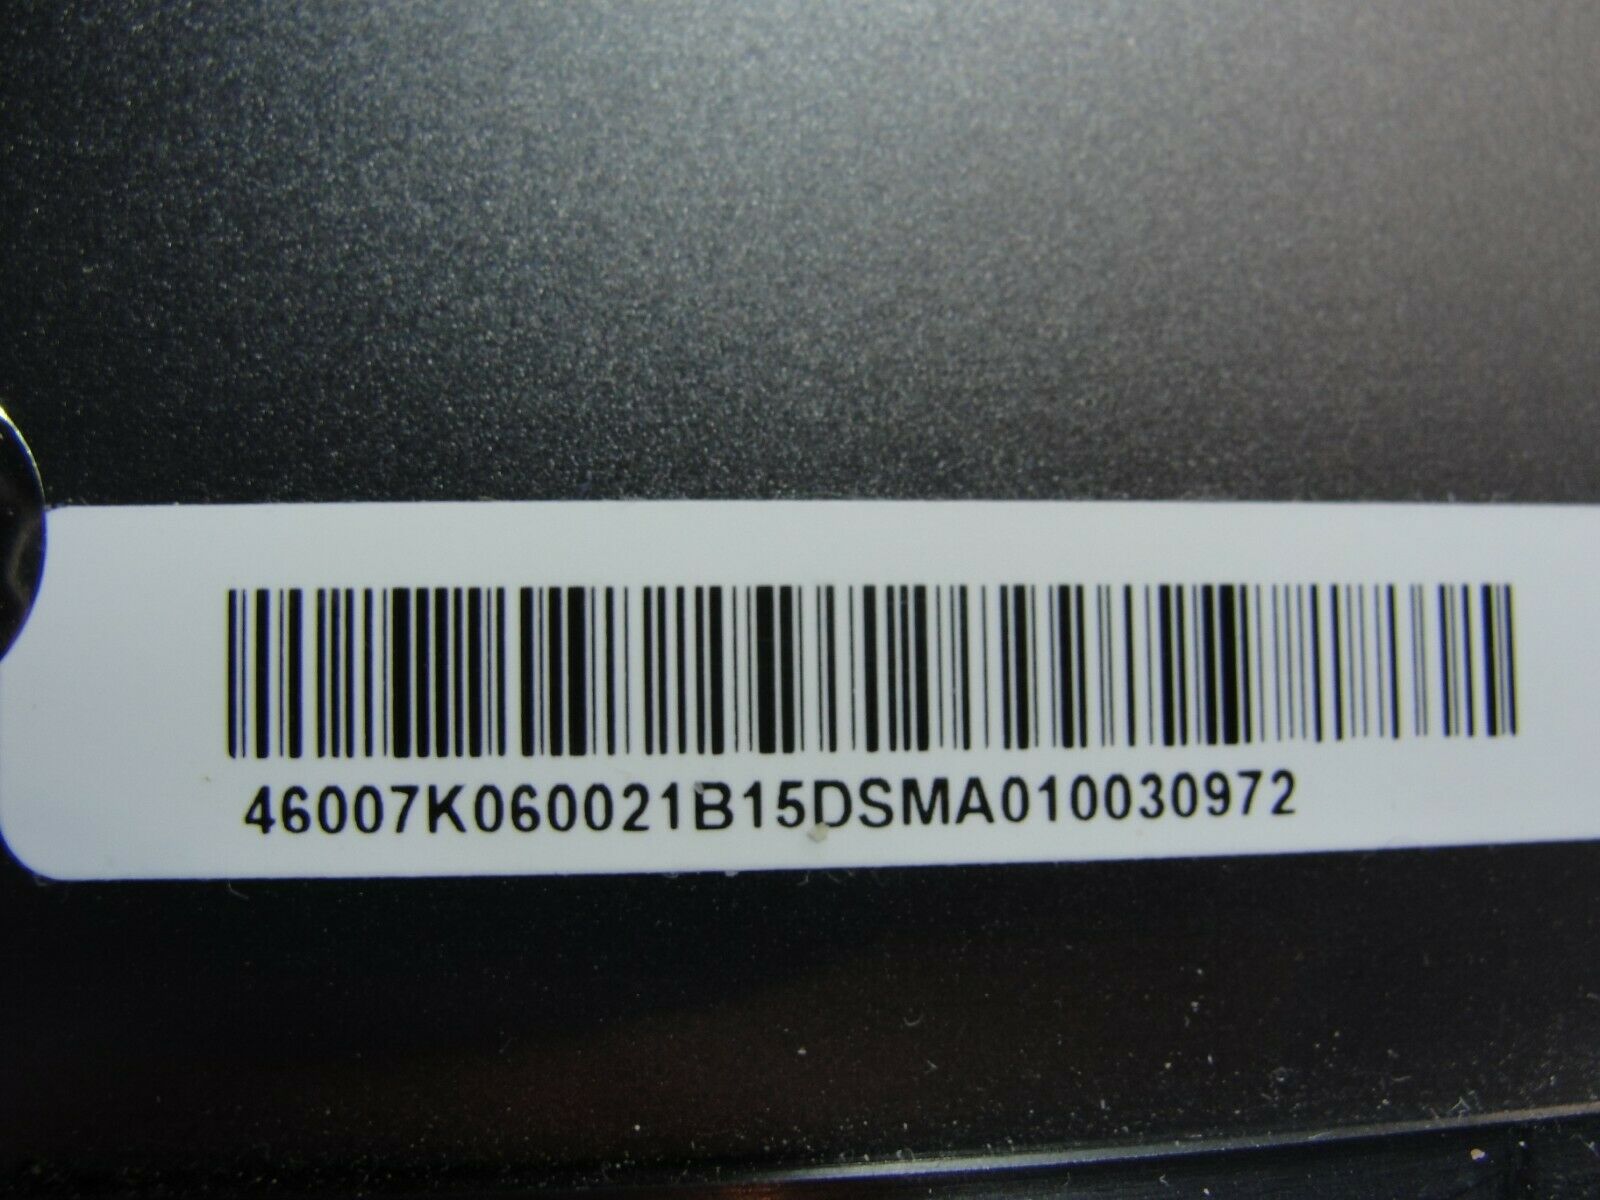 HP Envy x360 m6-ar004dx 15.6